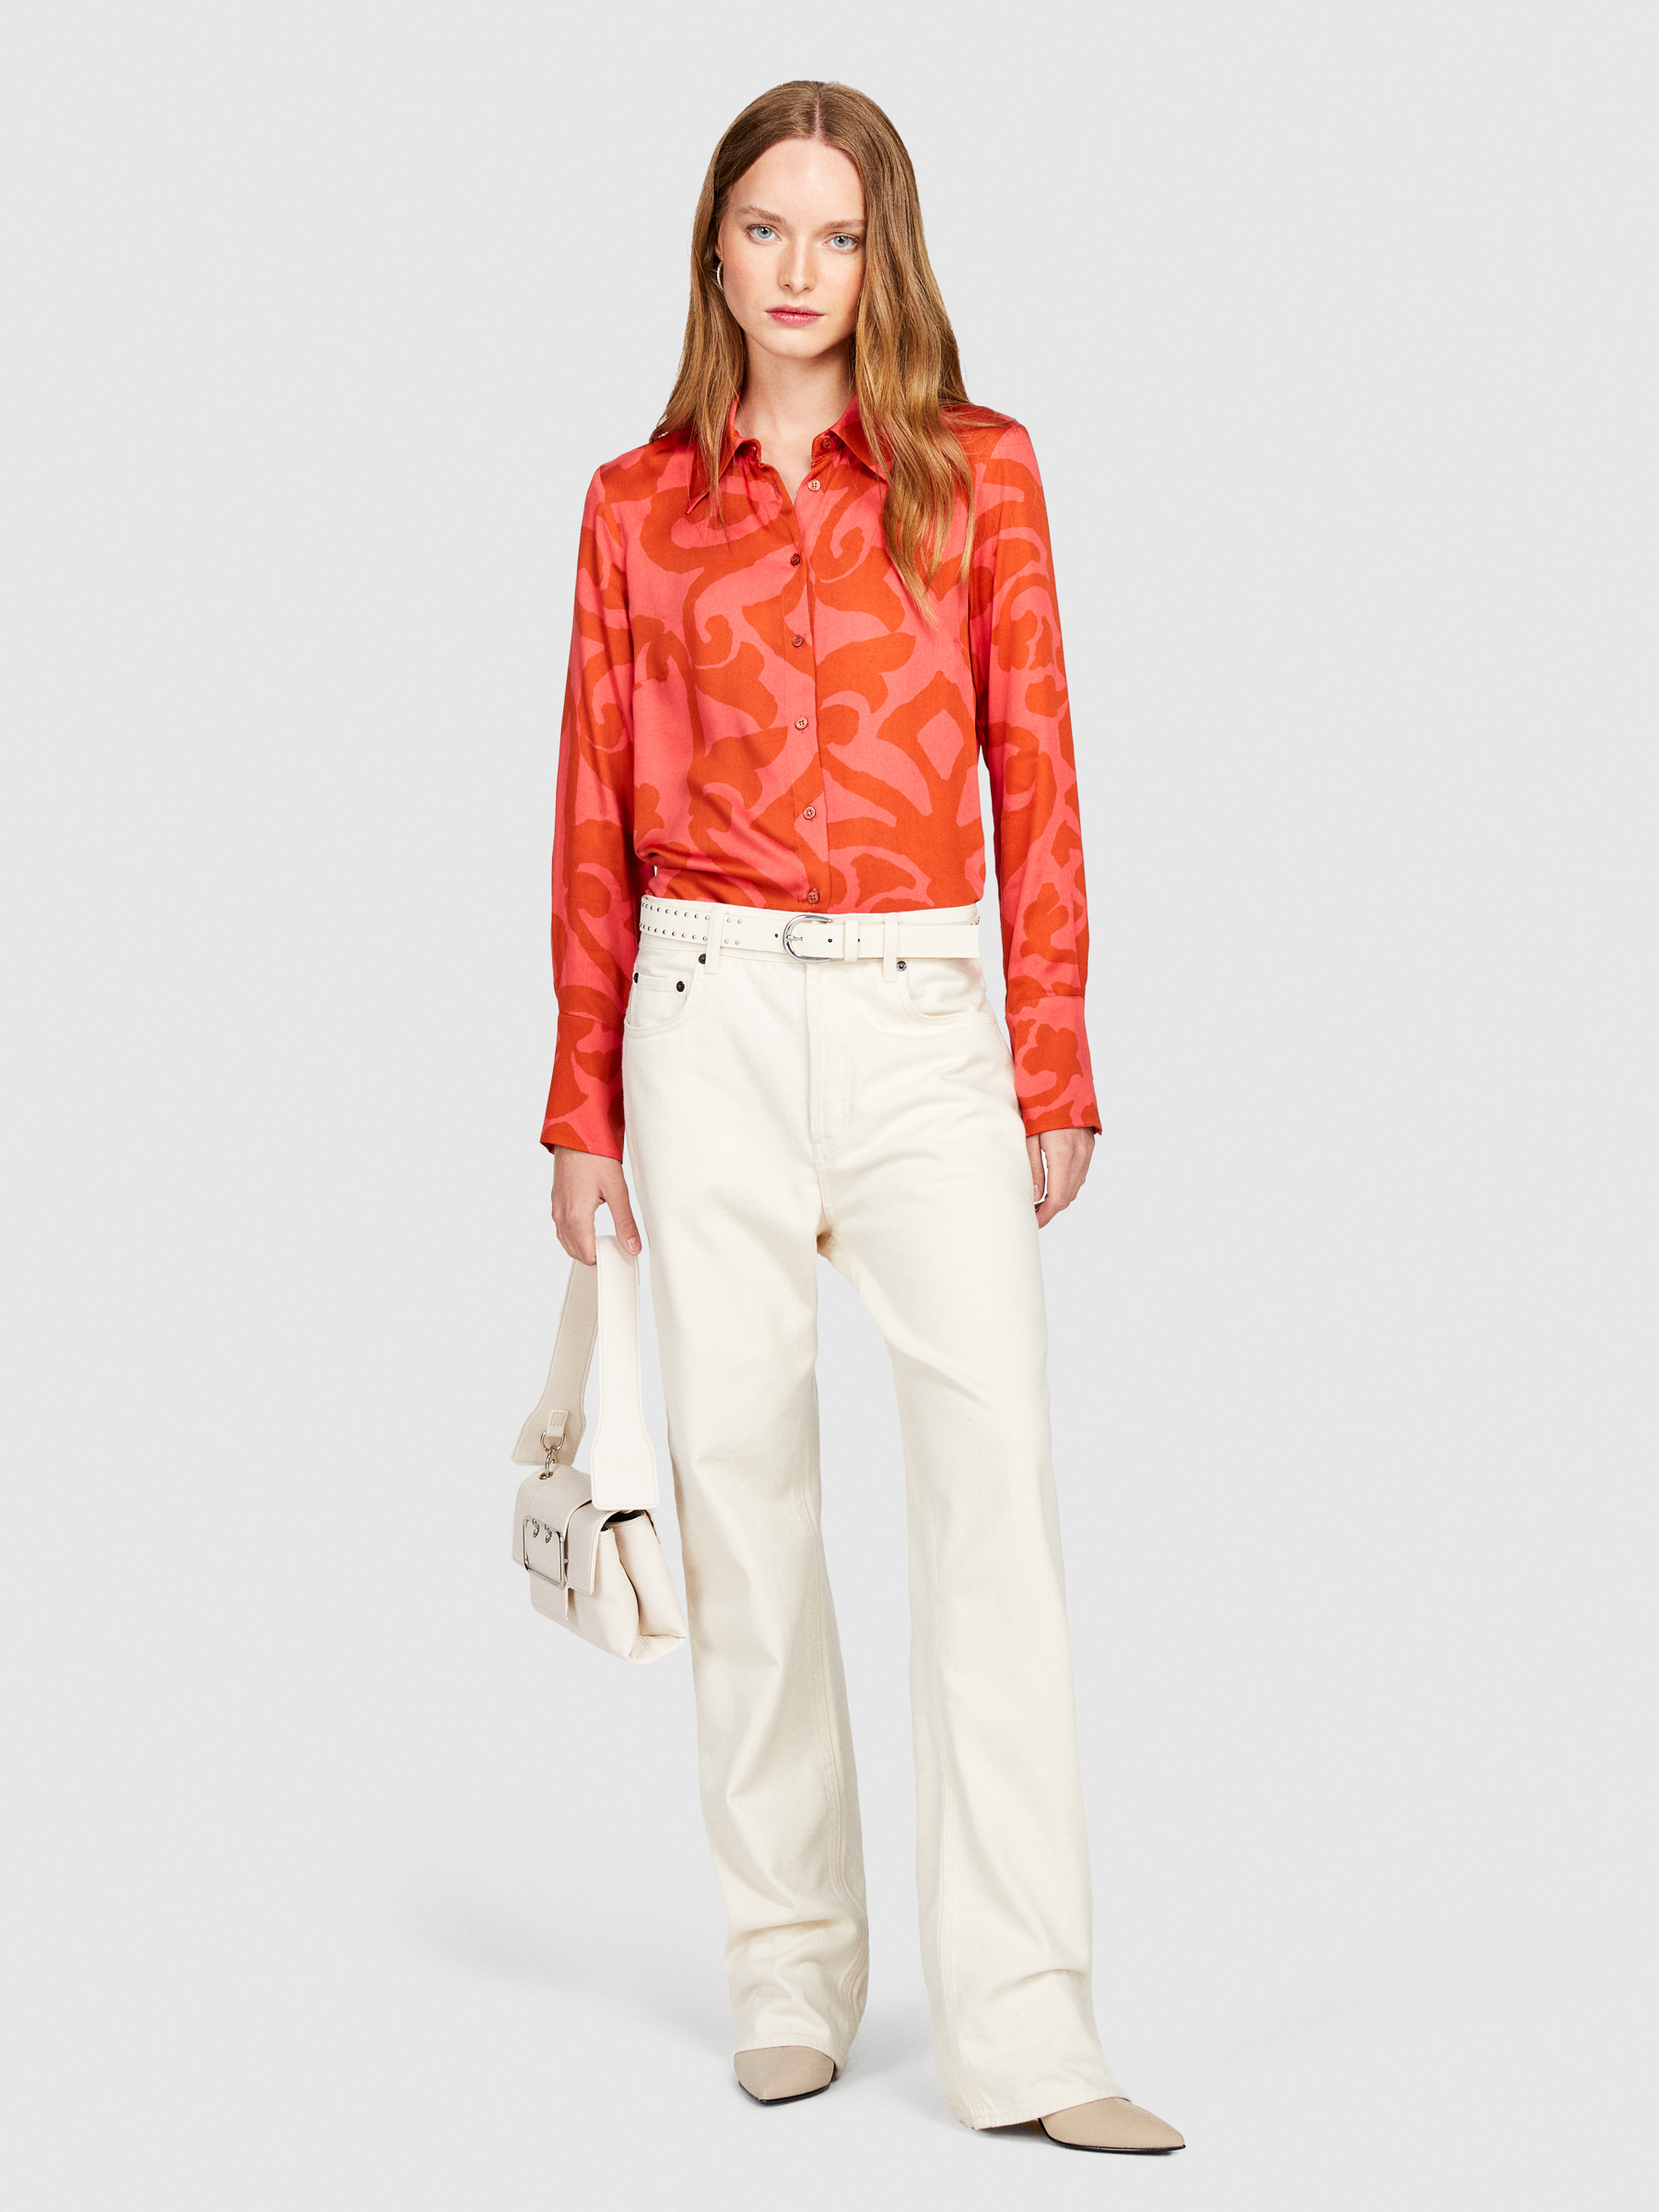 Sisley - Printed Shirt In Satin, Woman, Coral, Size: S